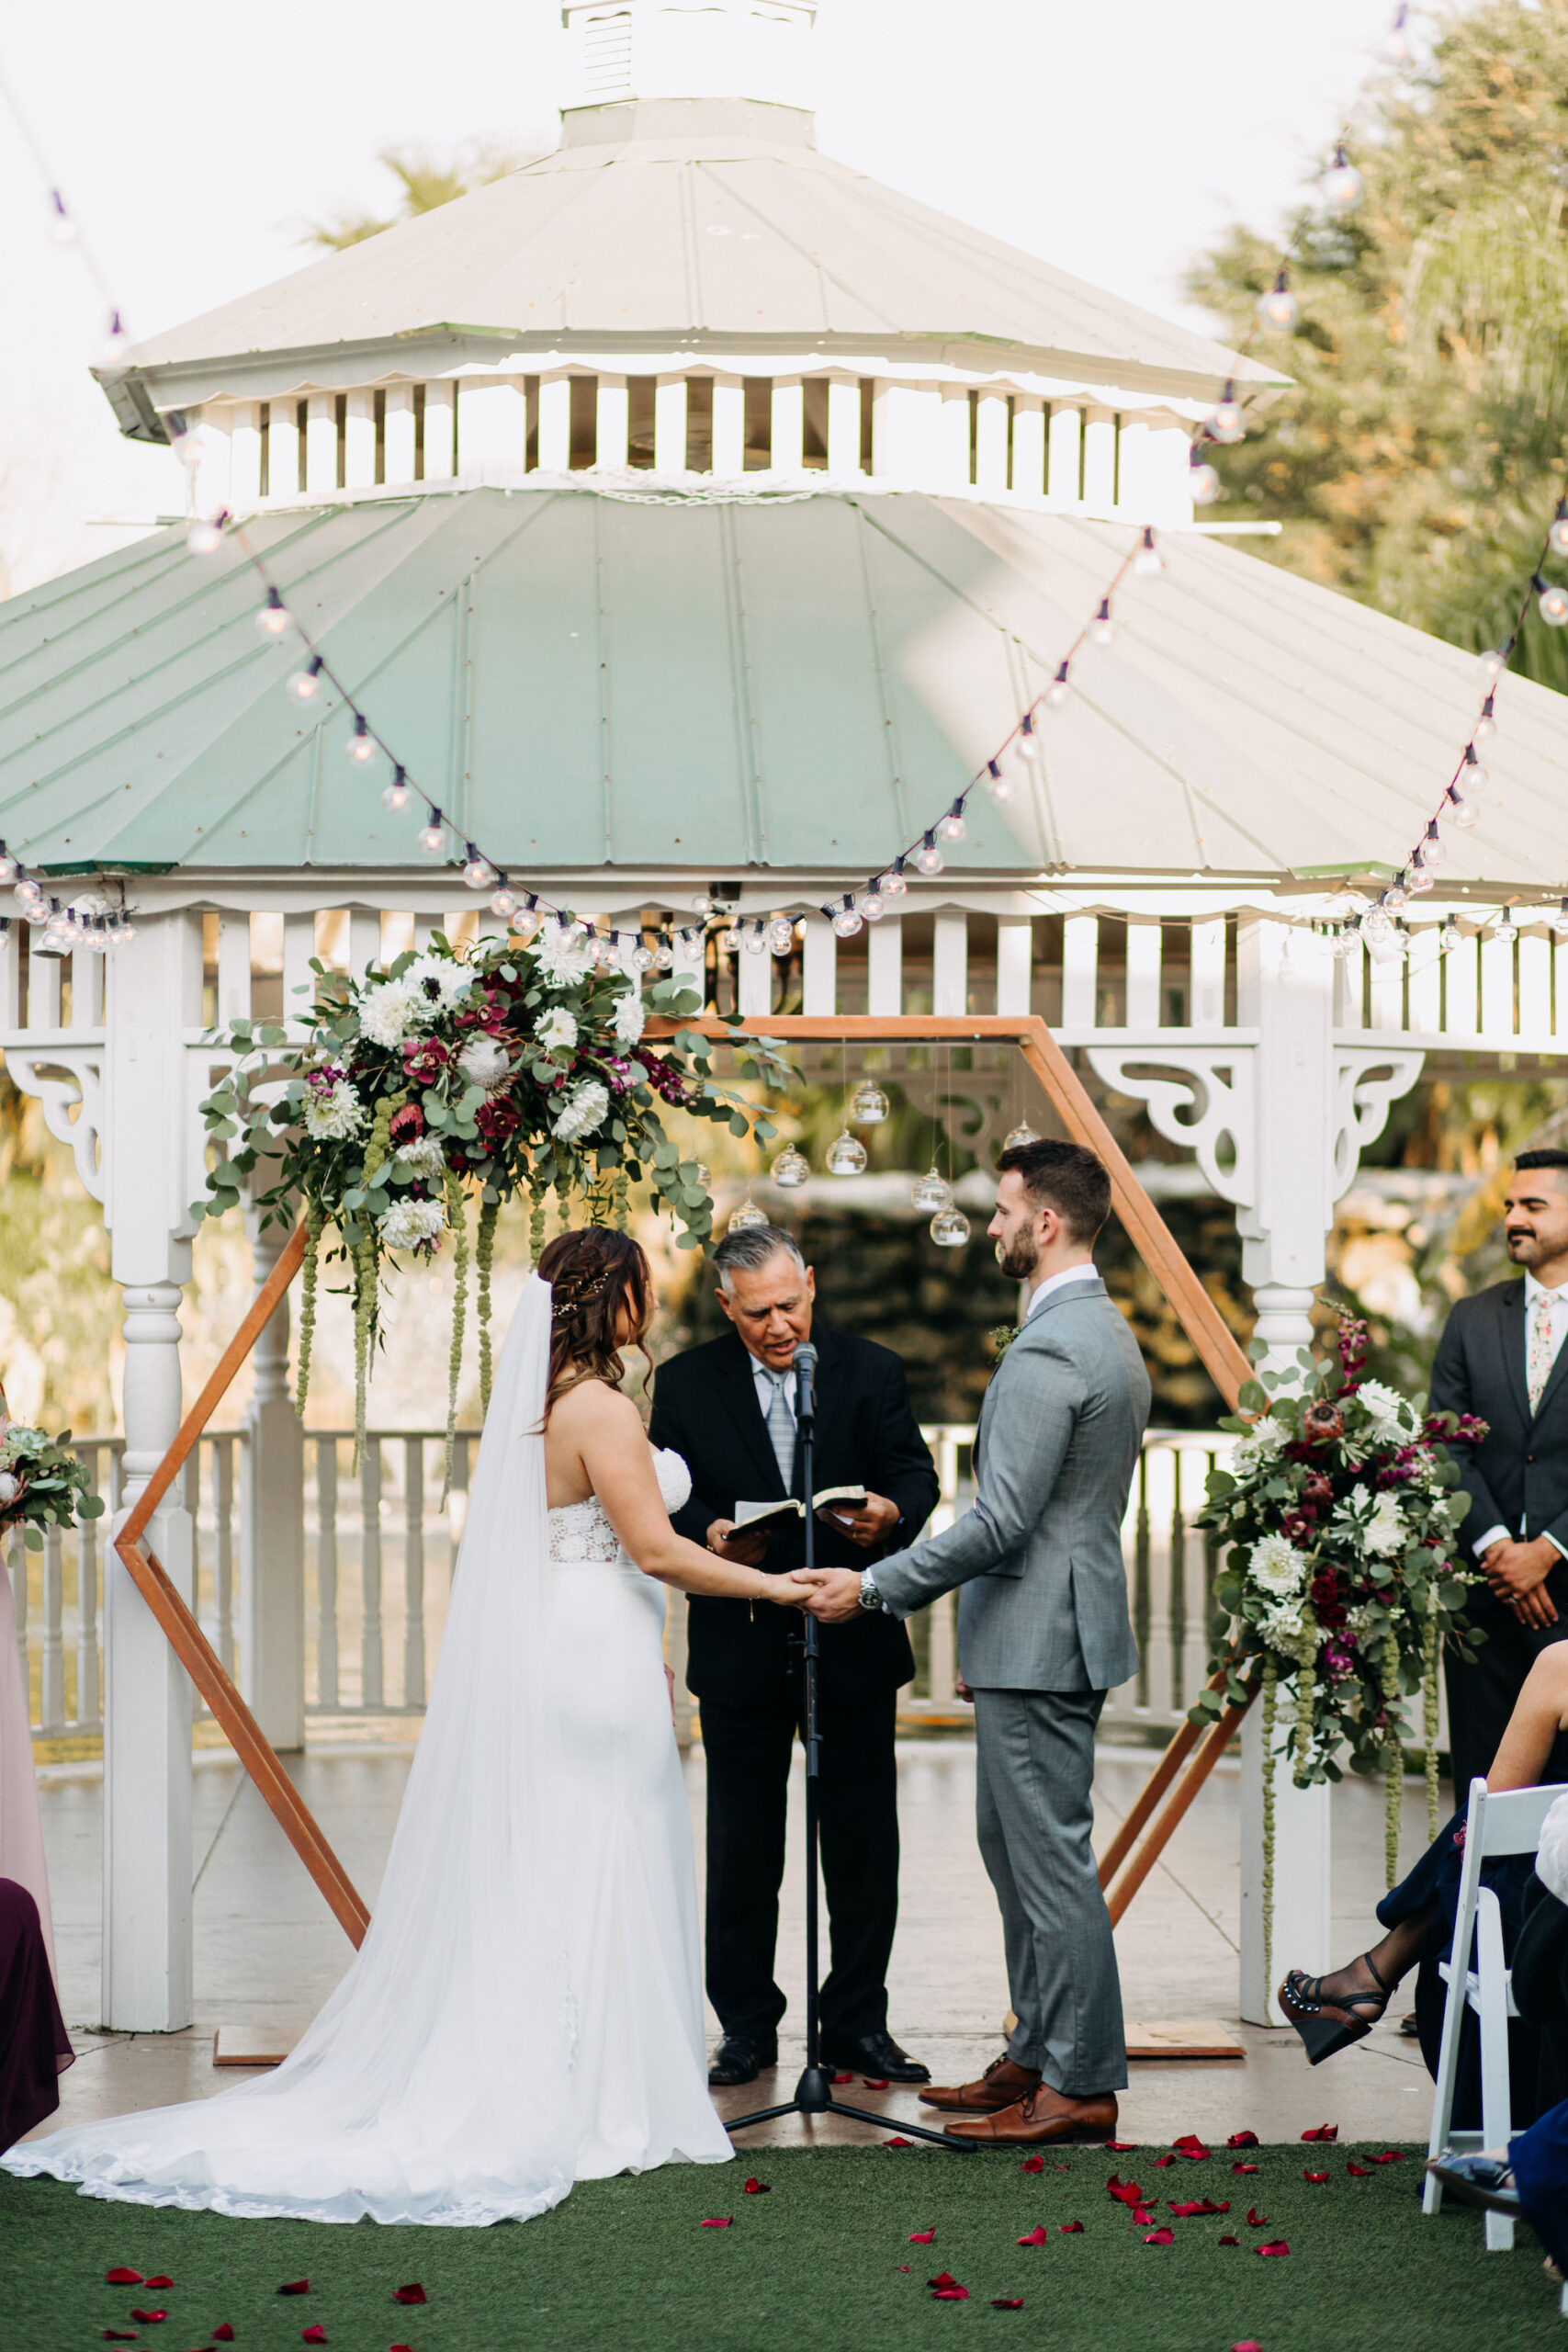 Outdoor Wedding Ceremony Gazebo with Geometric Hexagon Wooden Arch | Bohemian Flowers and Market Lights | Sarasota Wedding Venue The Pavilion at Mixon Farms